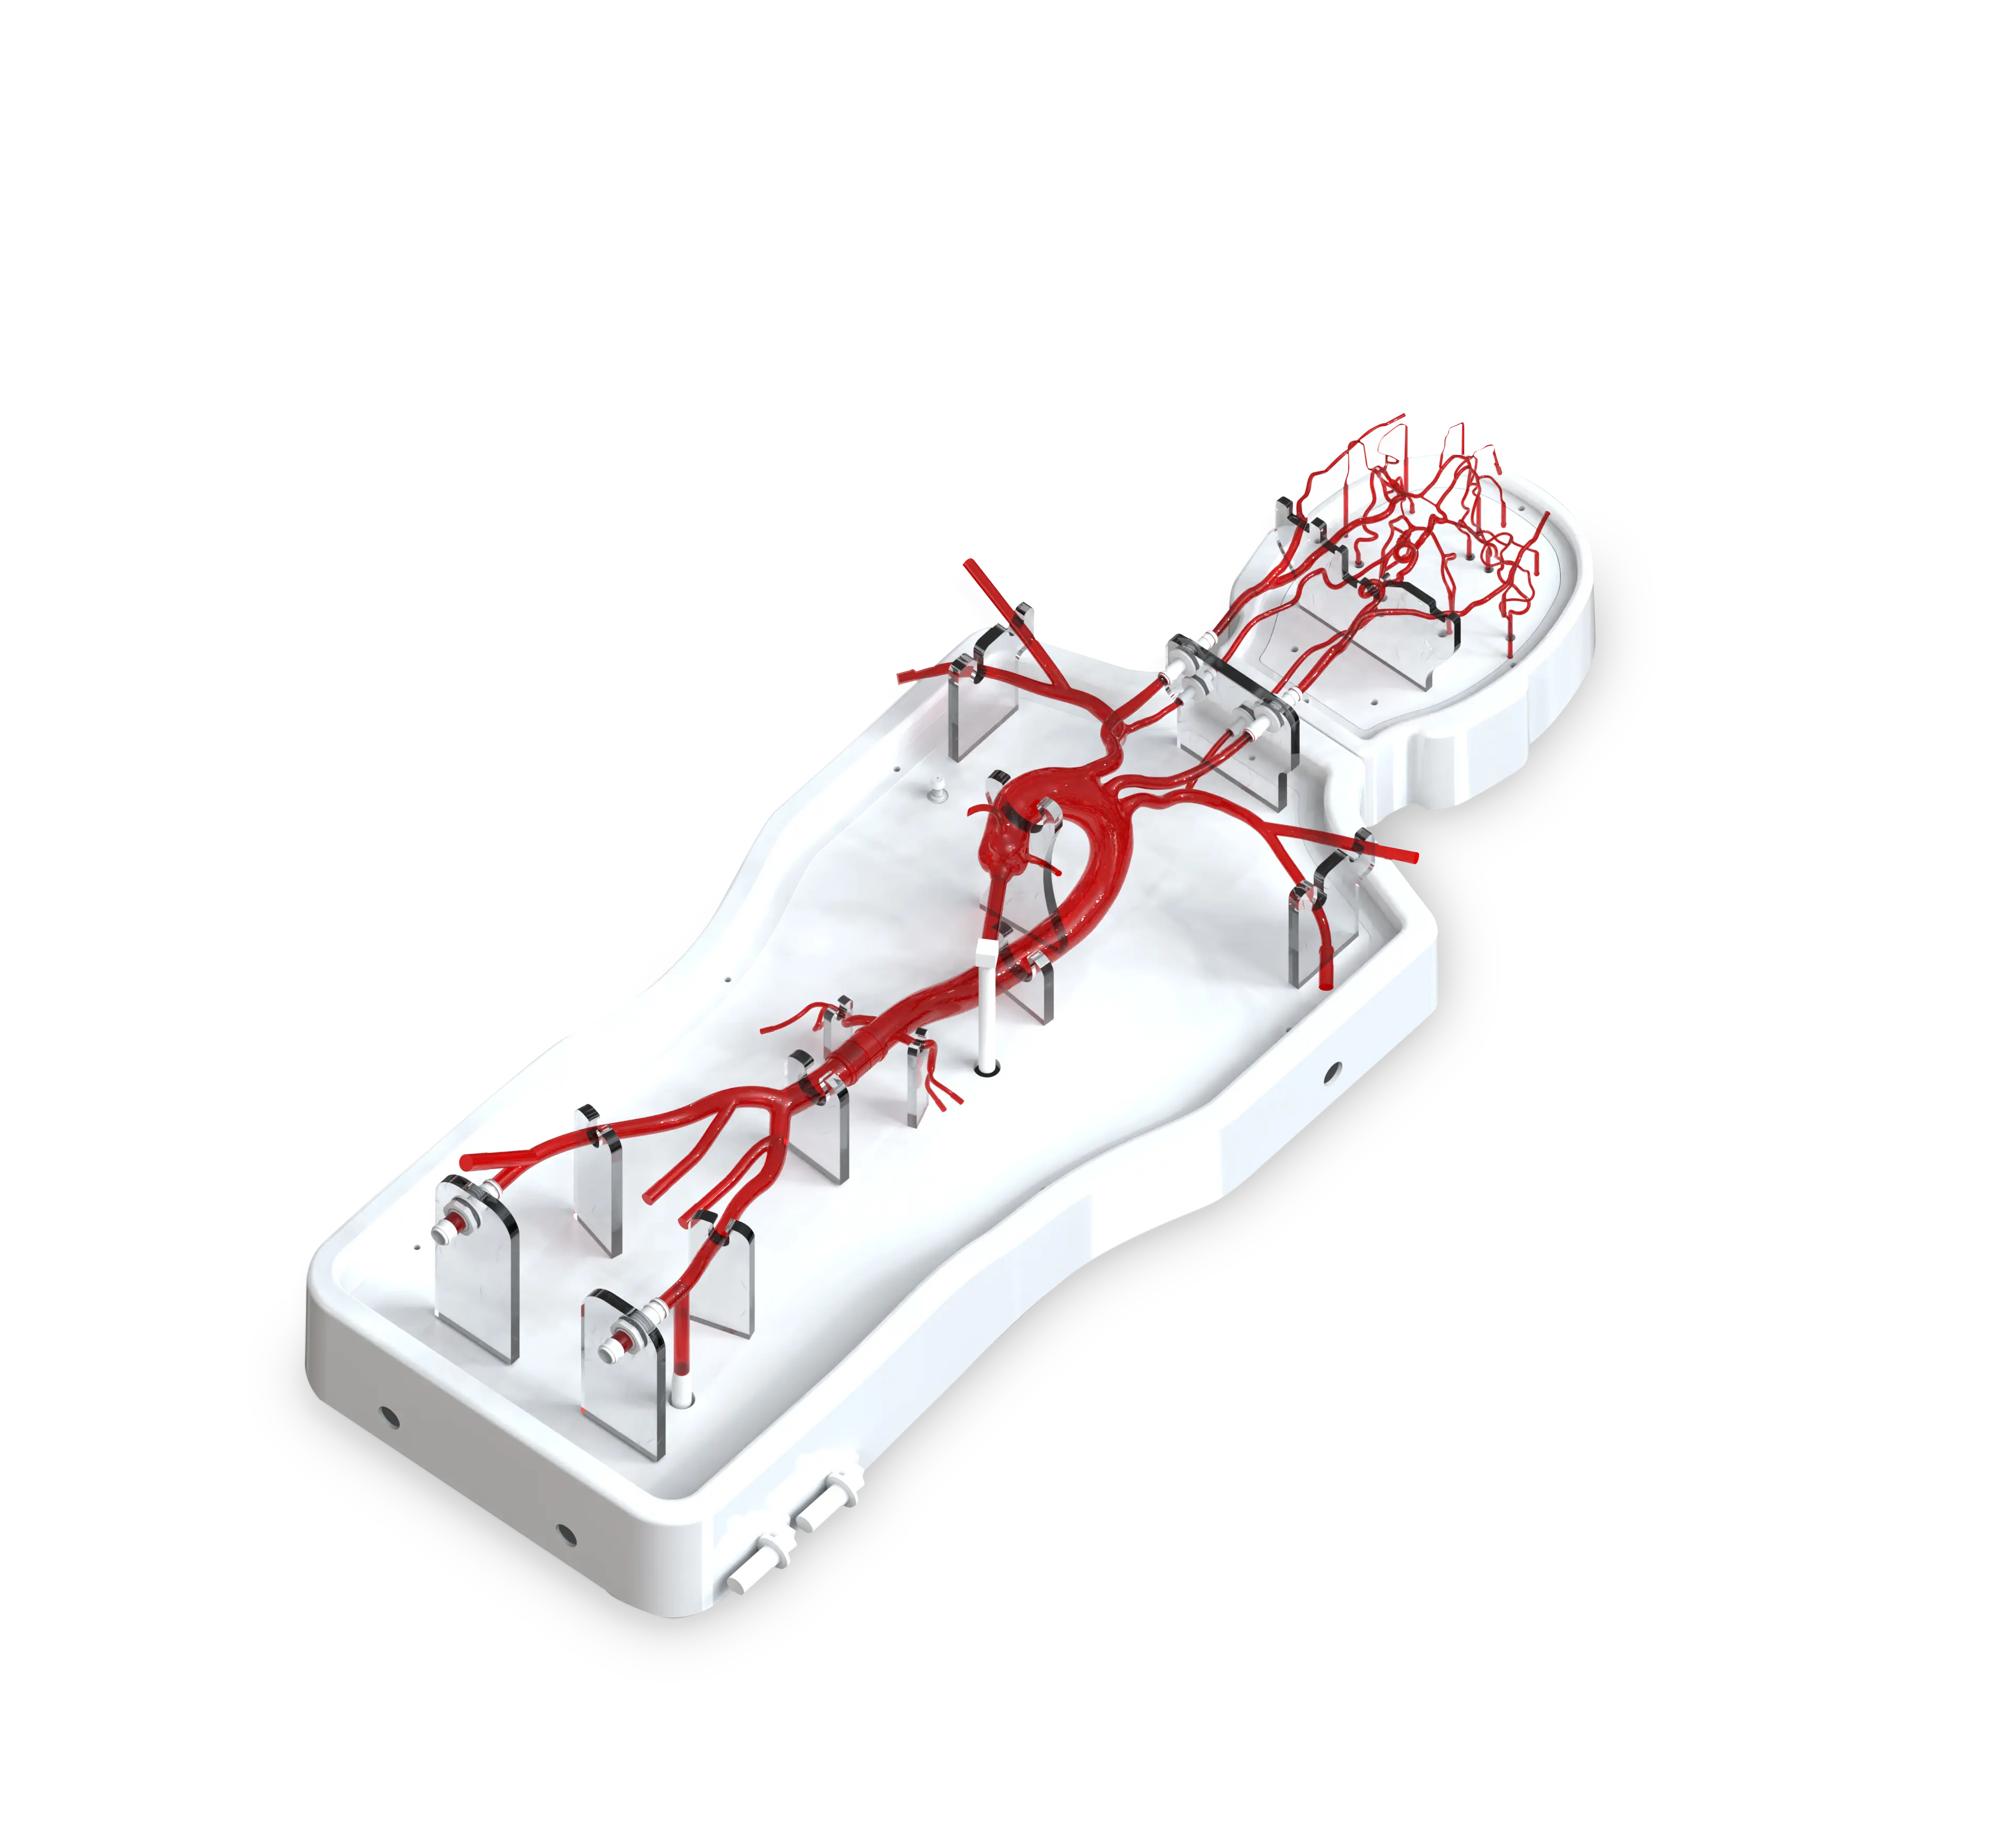 Drawing of Neurovascular operation training model-type B